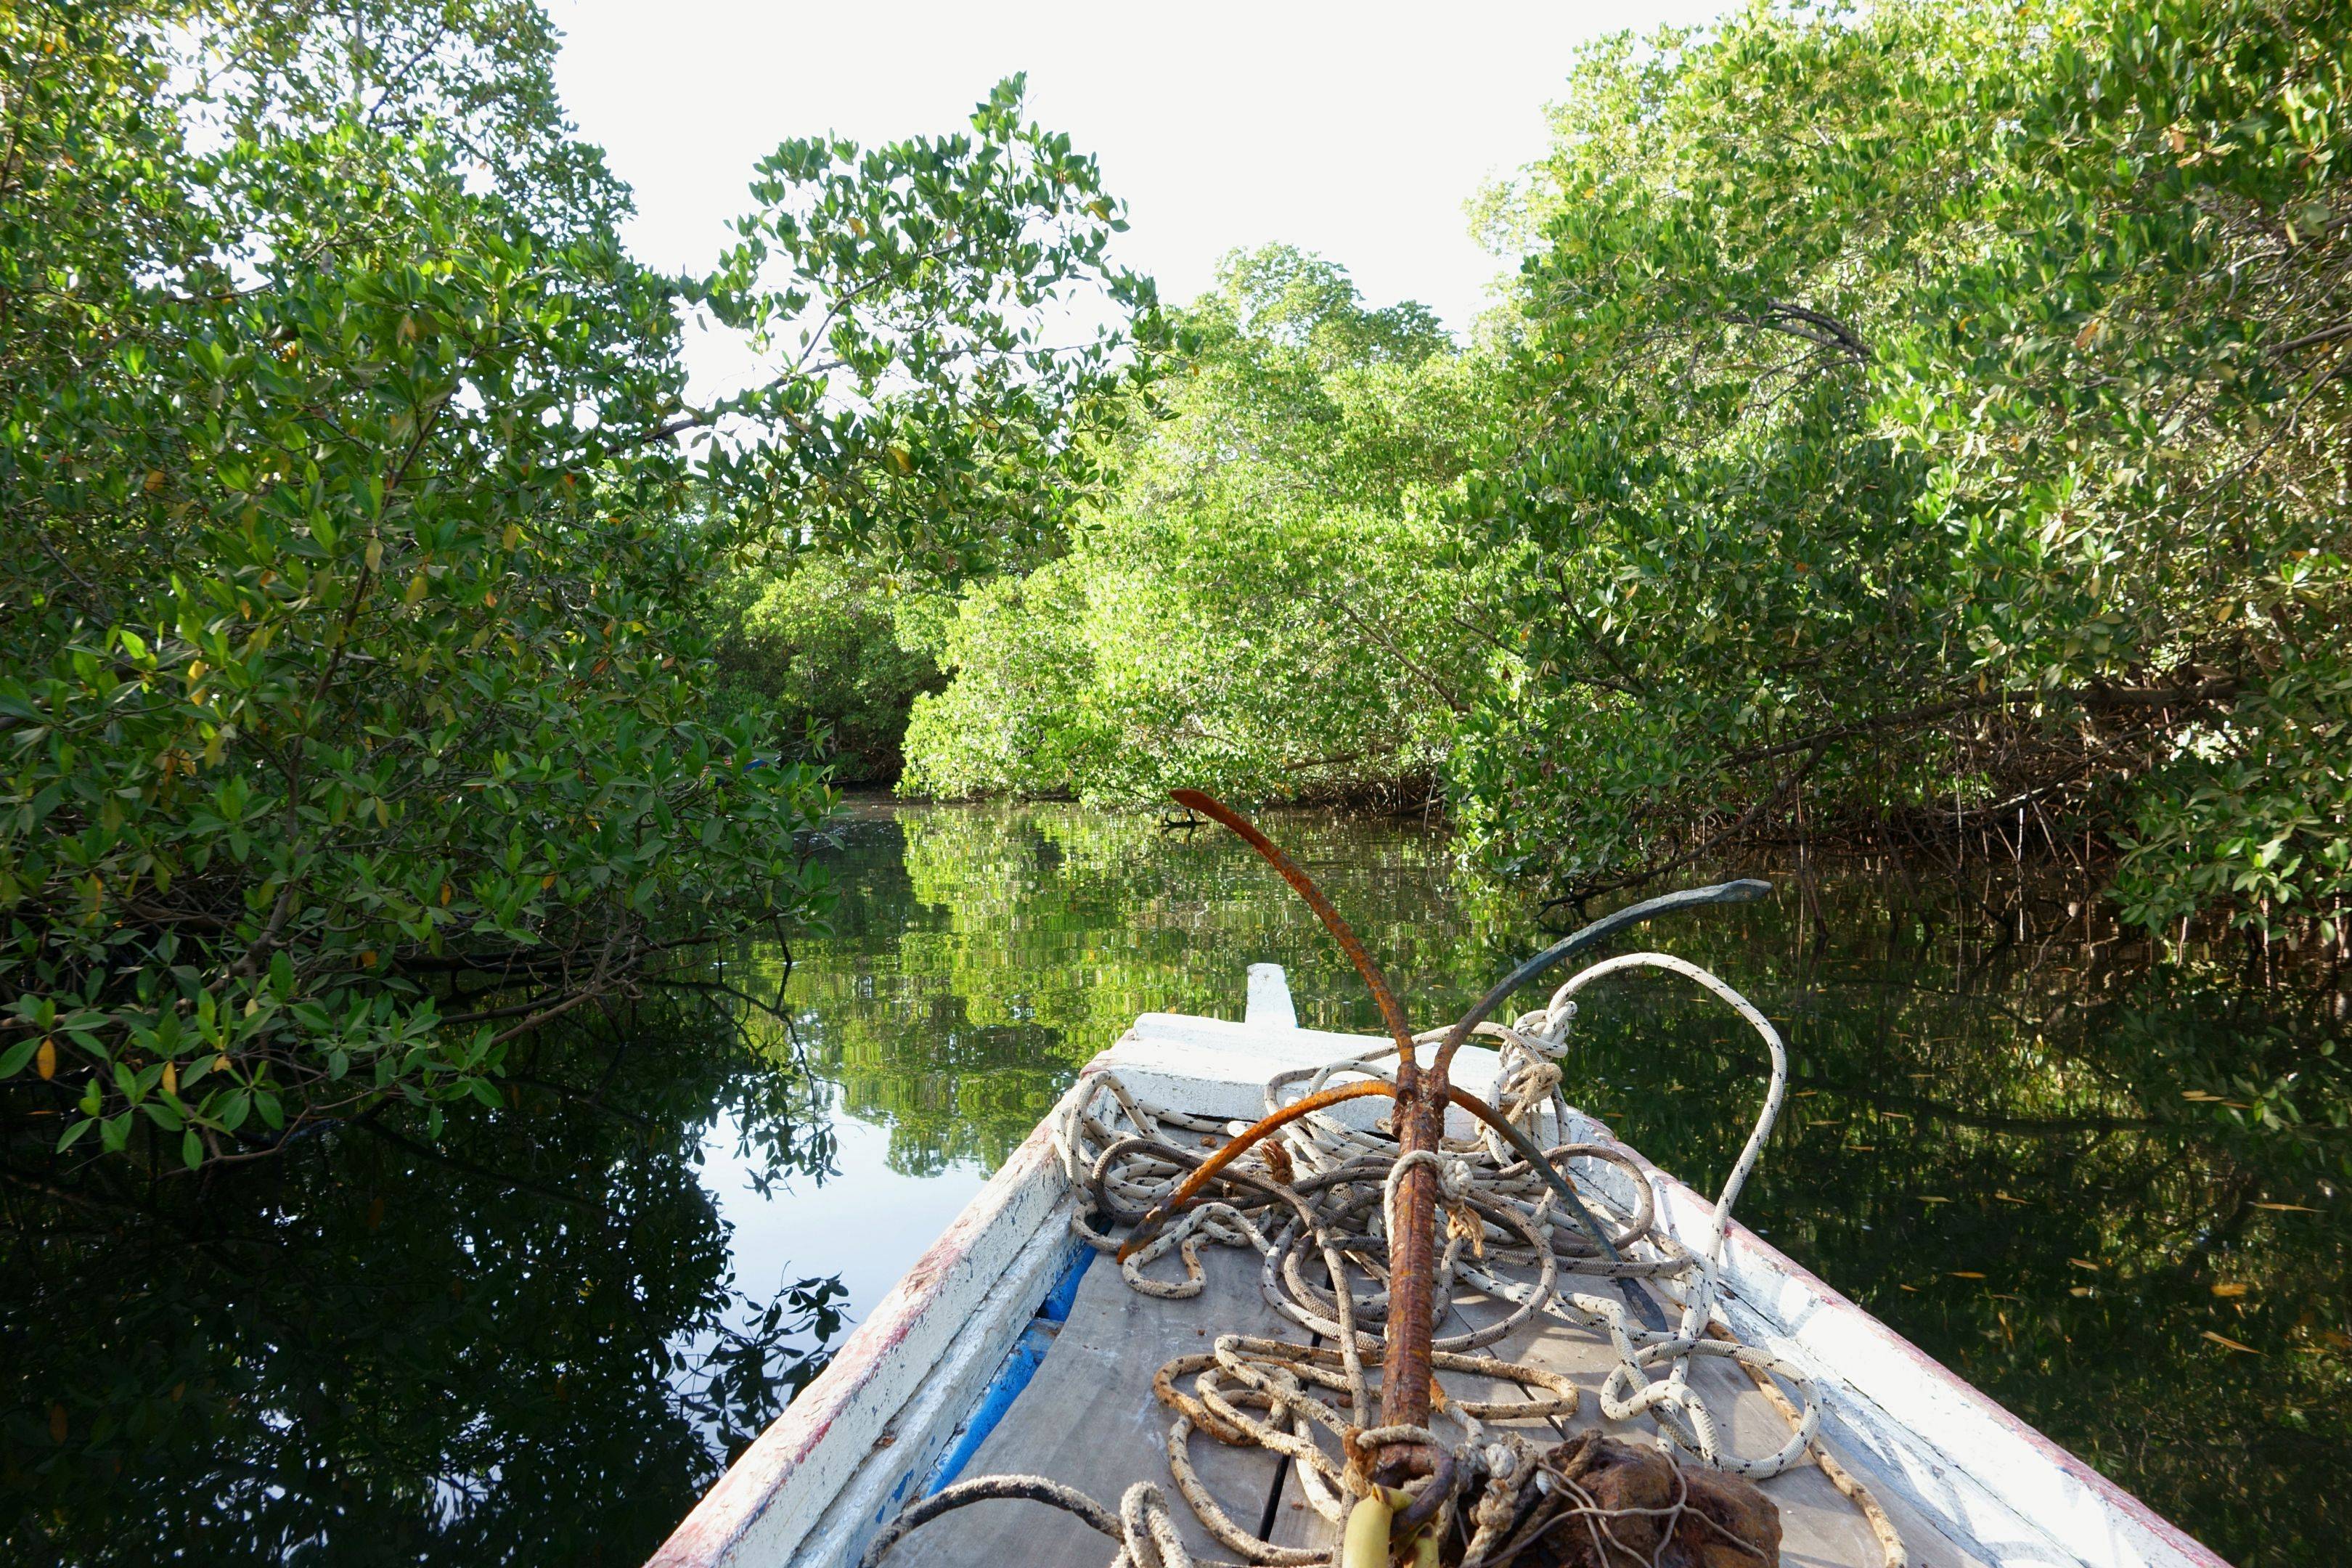 Escursione in piroga a motore tra le mangrovie